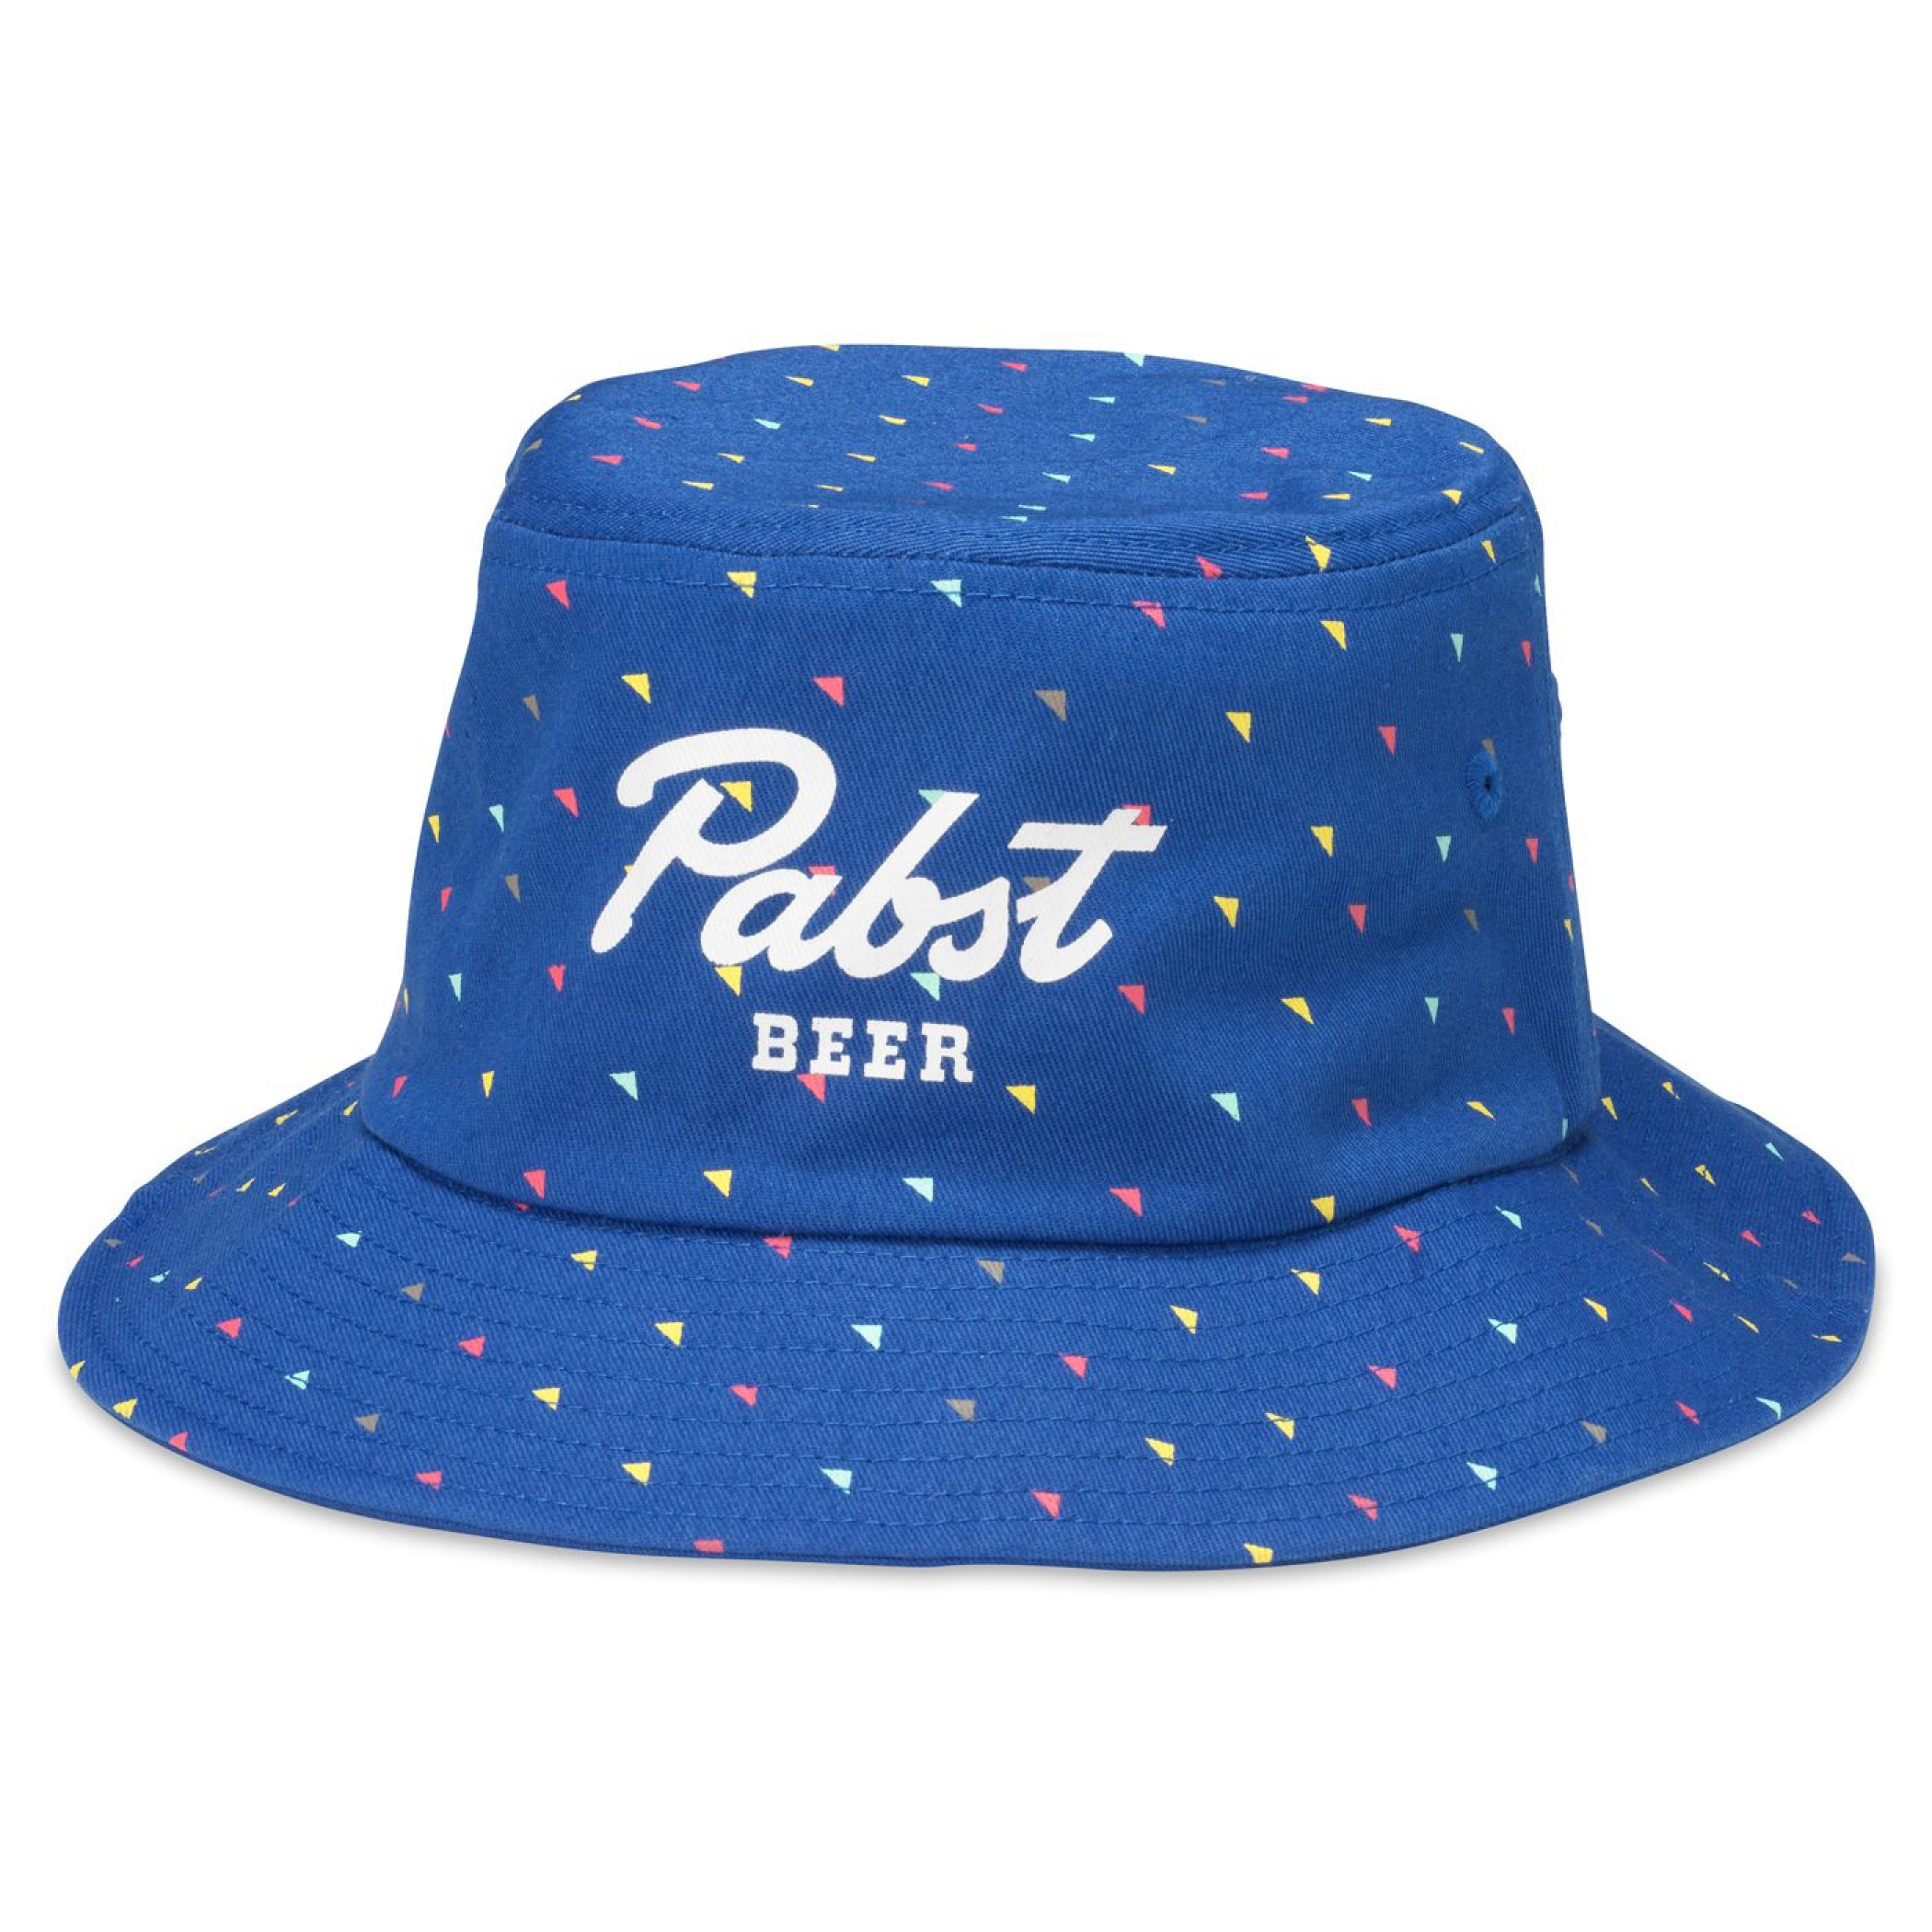 Pabst Blue Ribbon Blue Bucket Hat